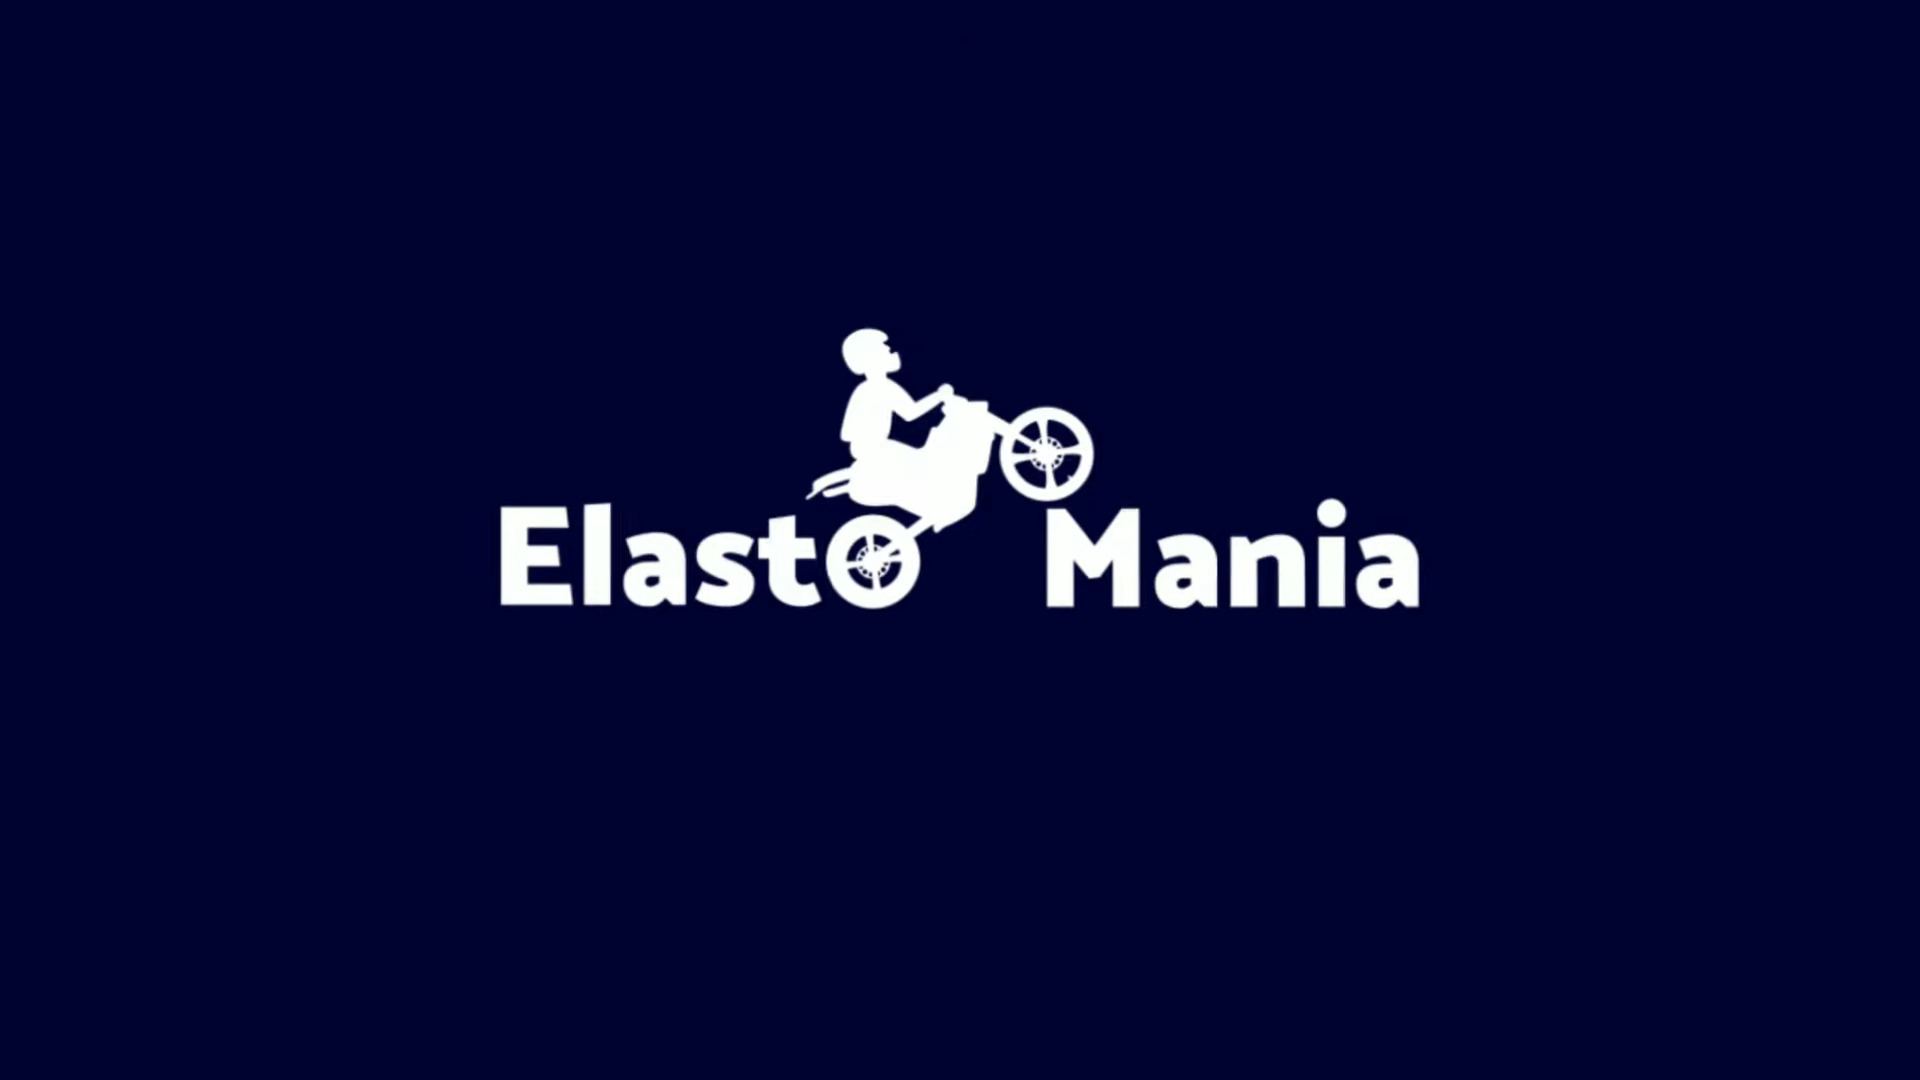 Télécharger Elasto Mania Remastered pour Android gratuit.